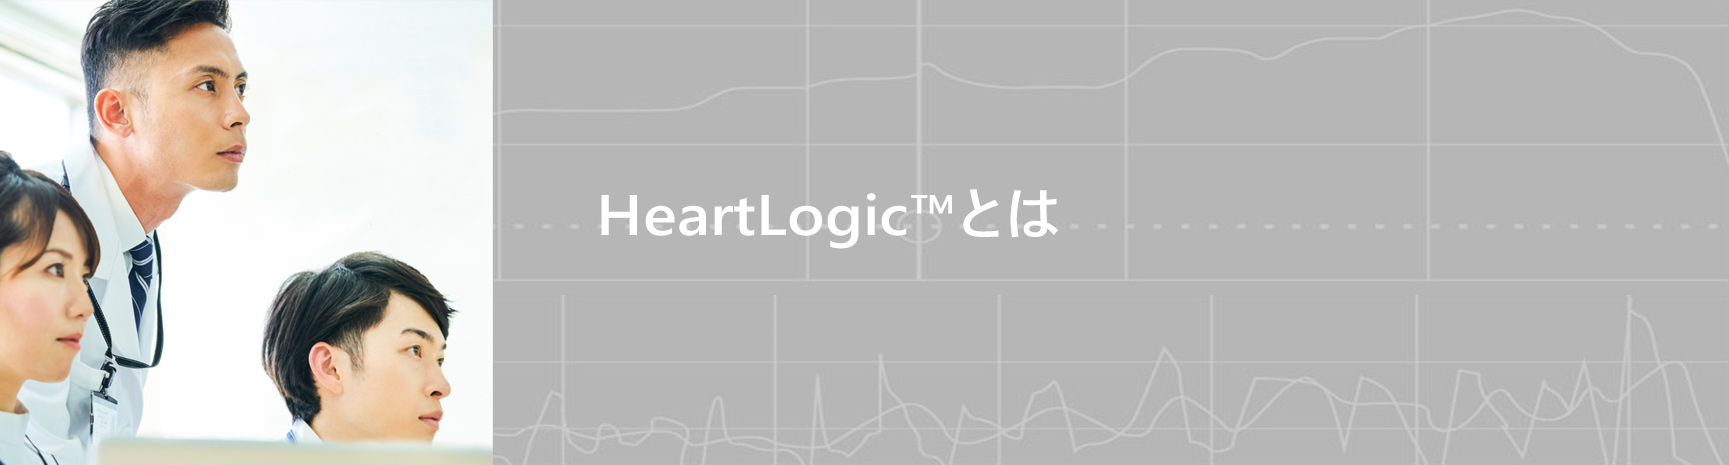 HeartLogic